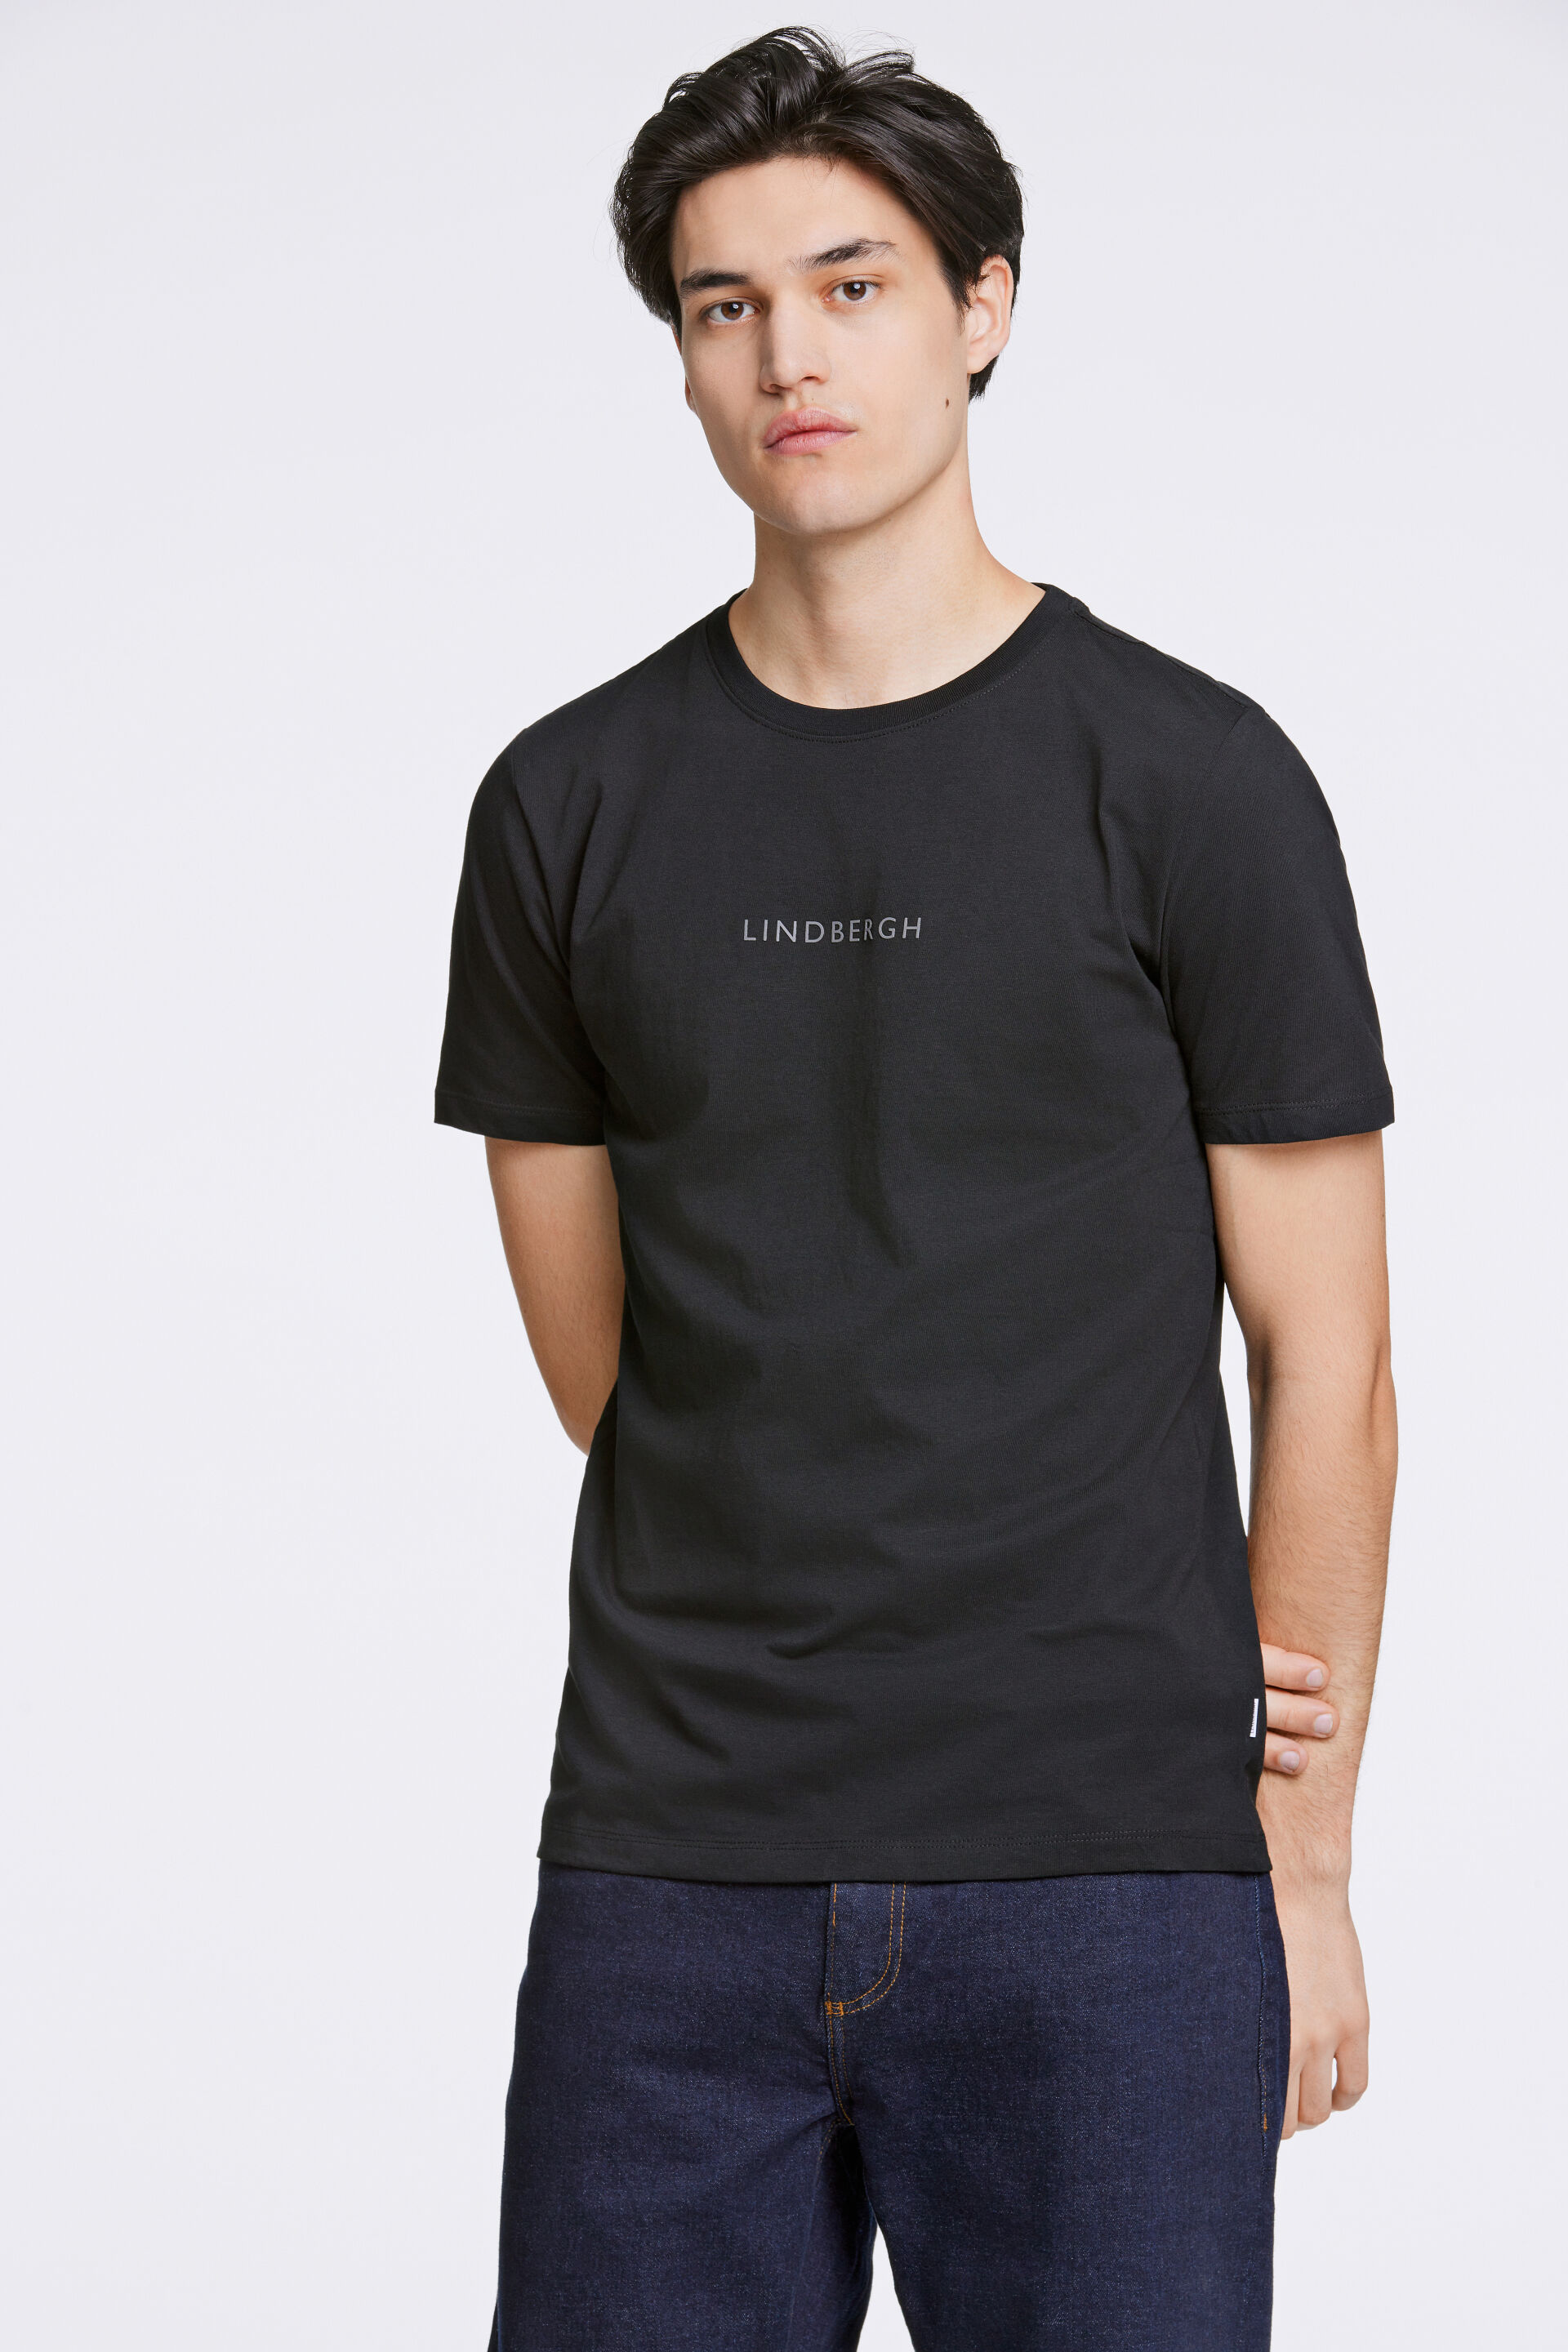 Lindbergh  T-shirt Sort 30-400200B